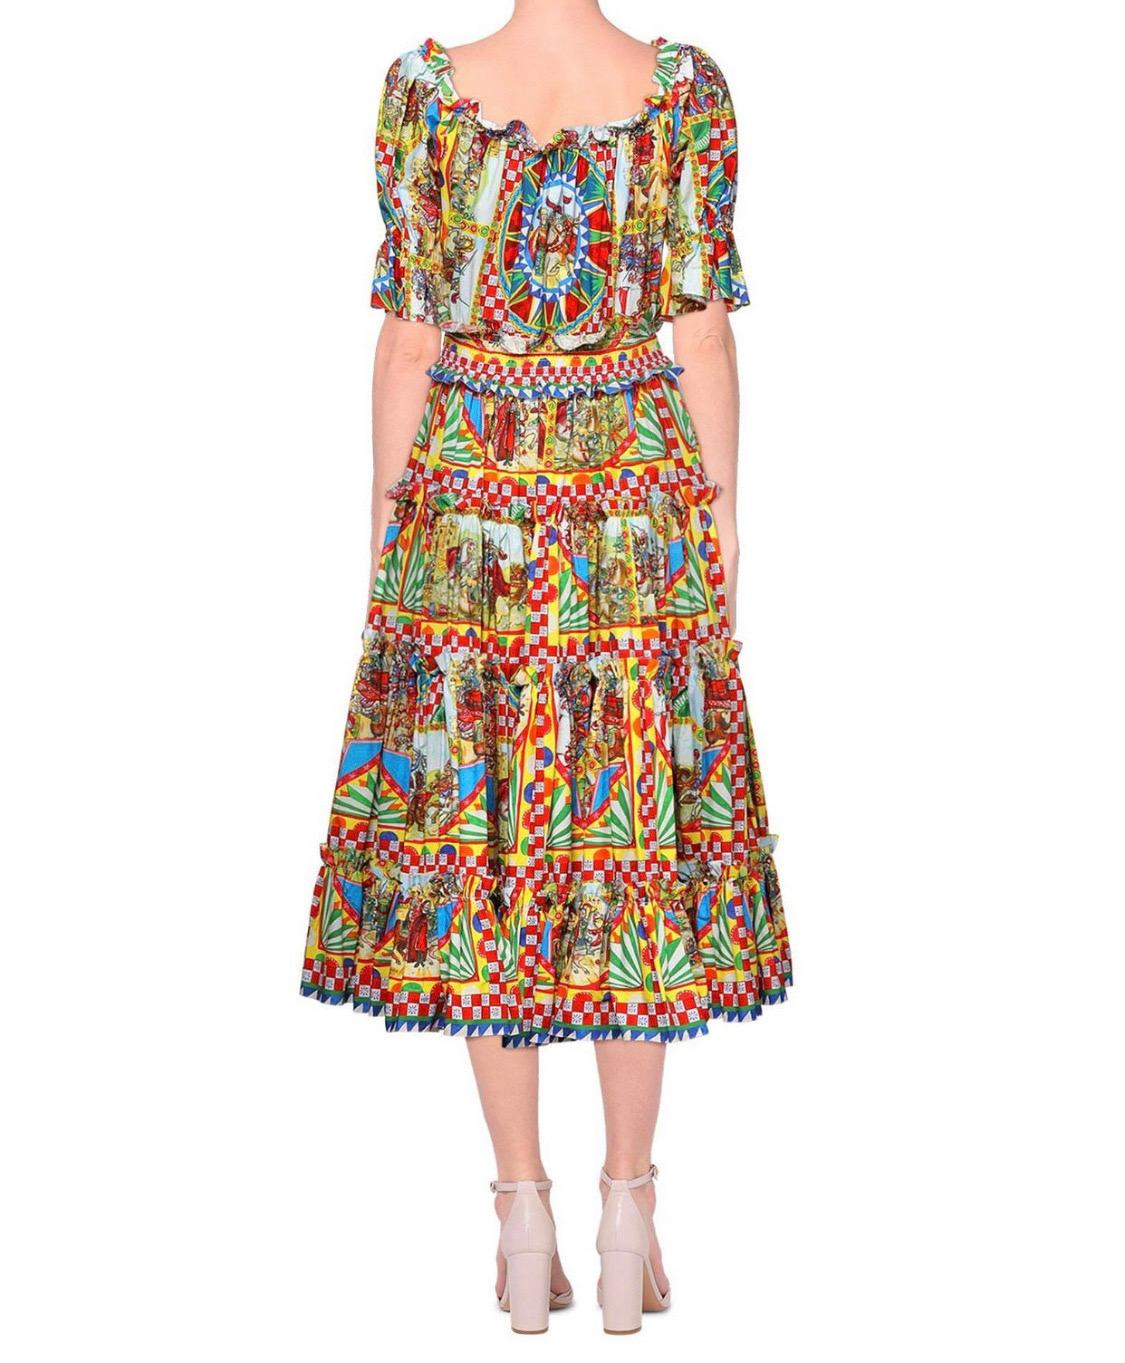 Dolce & Gabbana cotton poplin maxi
dress with all-over multicolor 